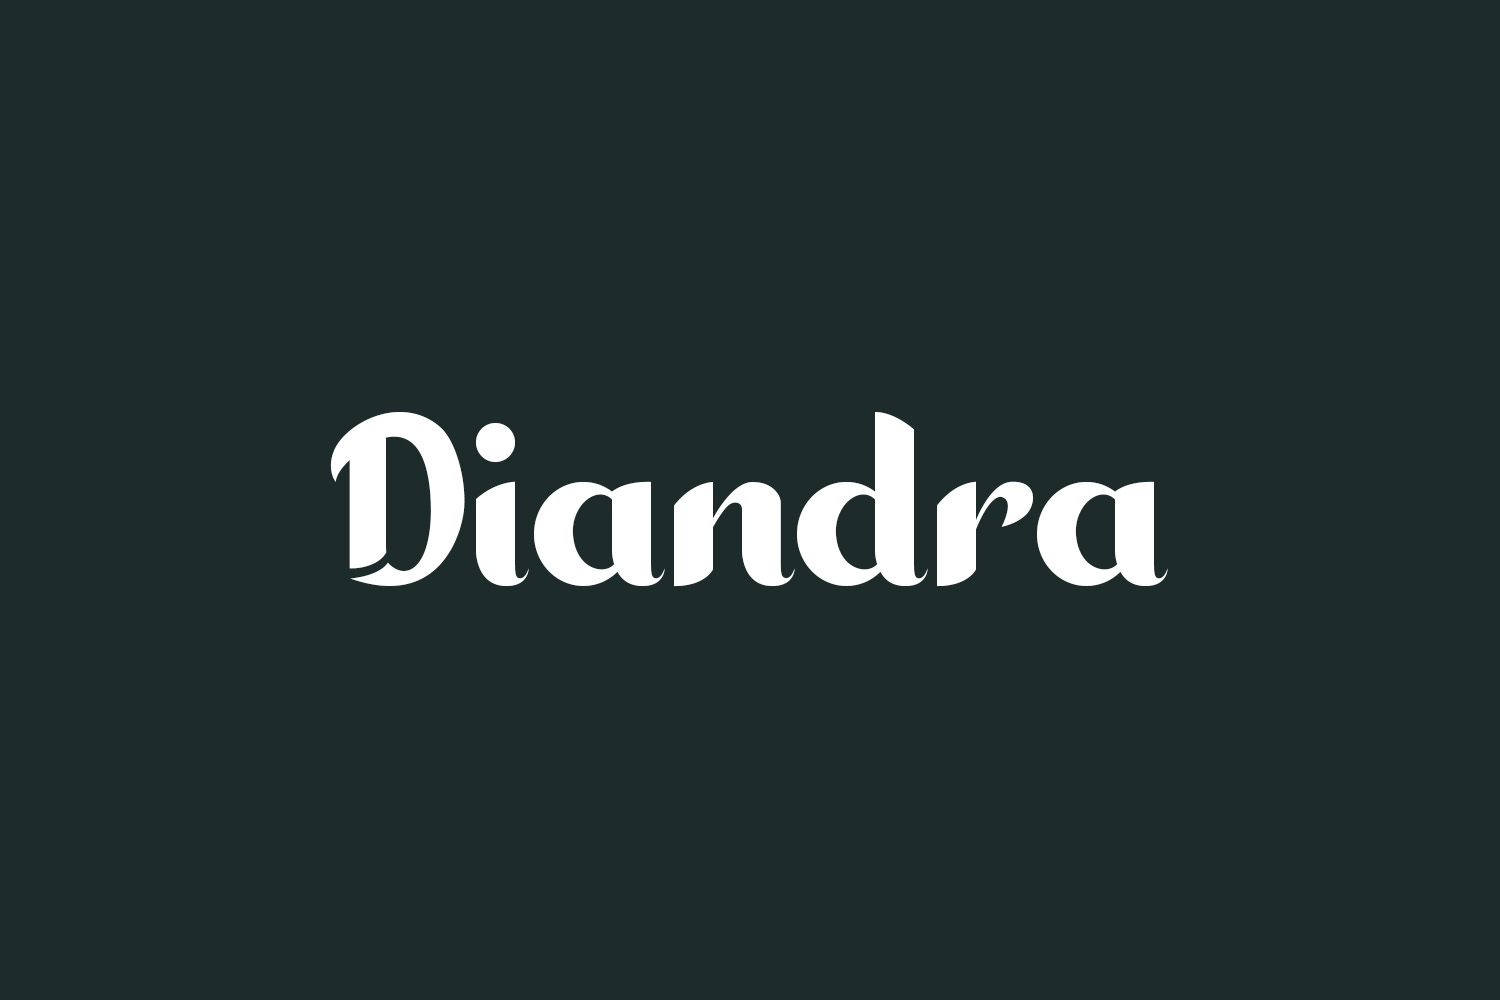 Diandra Free Font